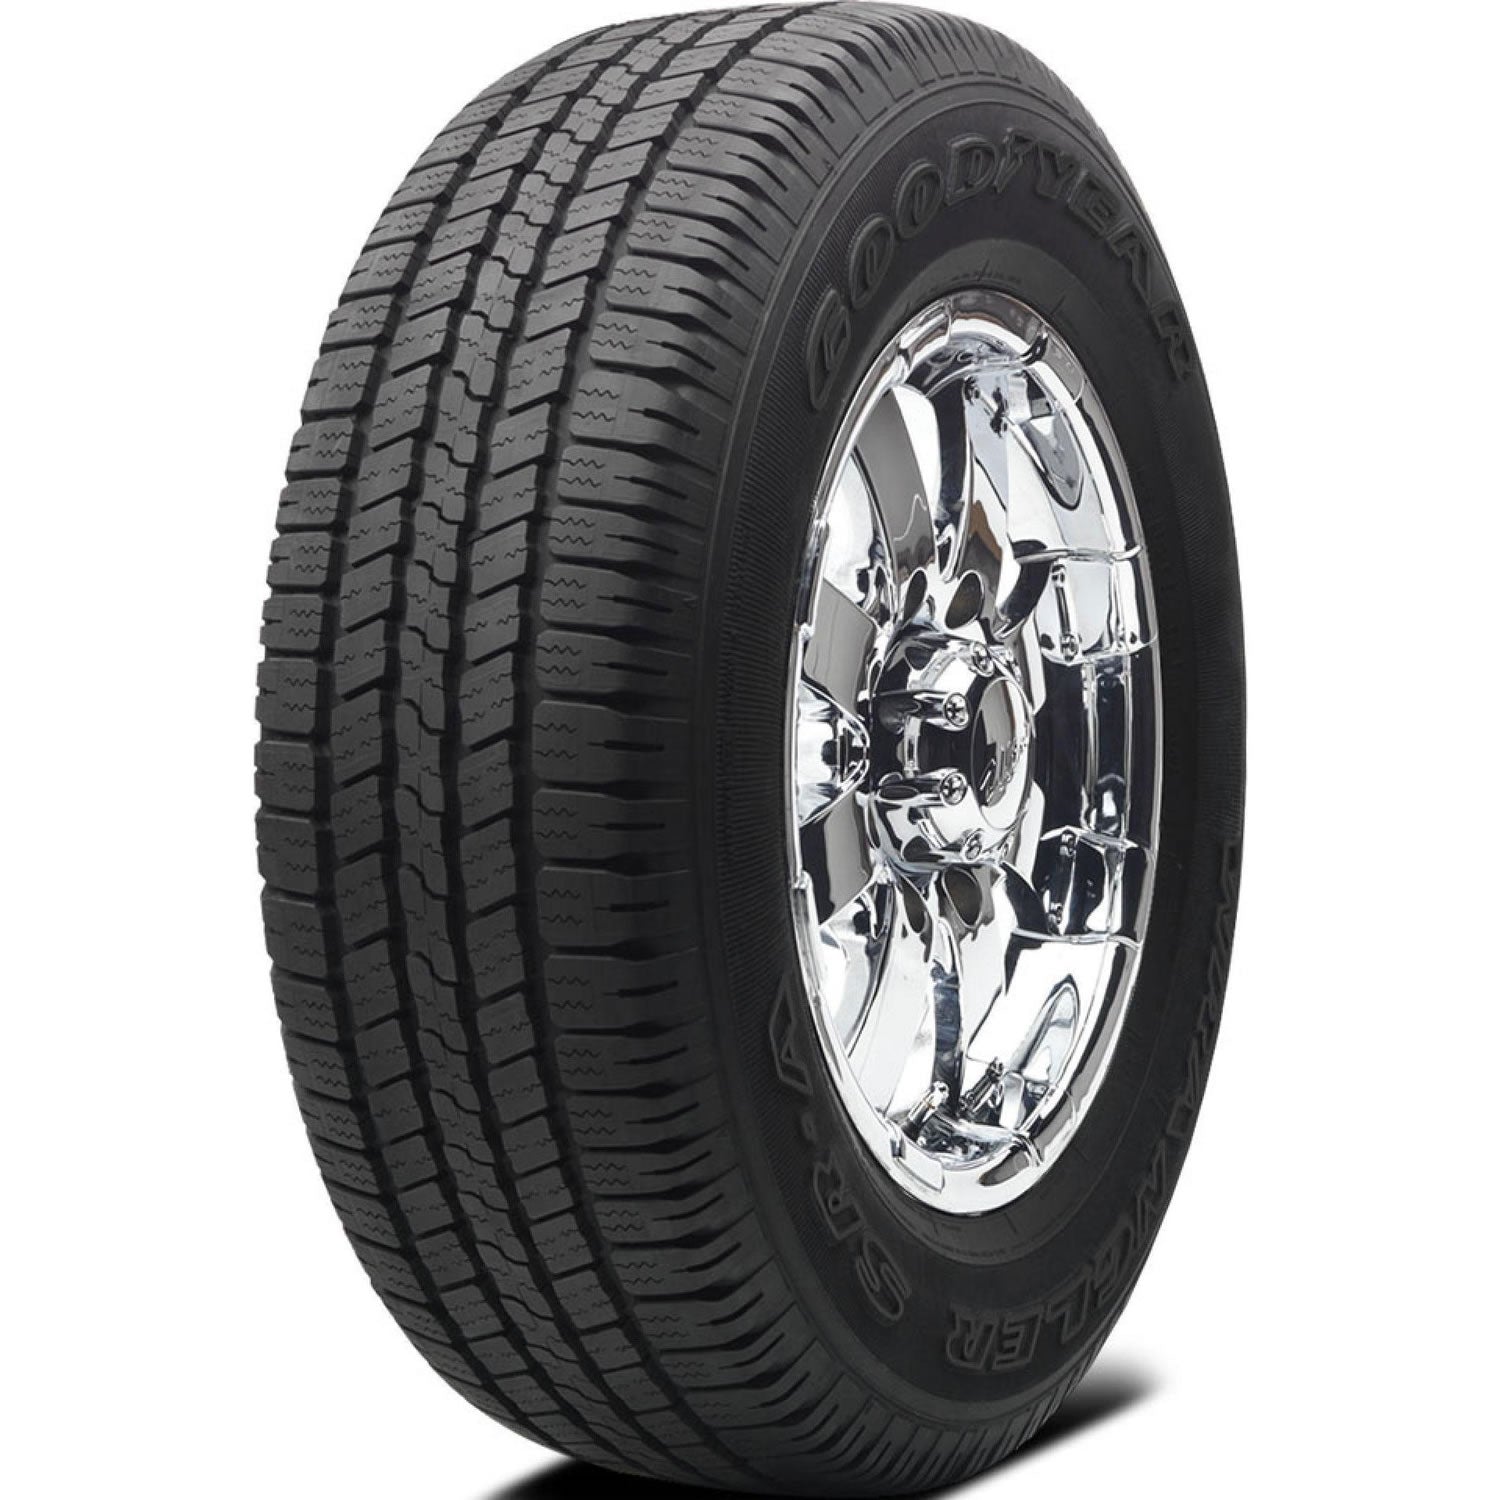 GOODYEAR WRANGLER SR-A LT265/60R20 (32.5X10.7R 20) Tires